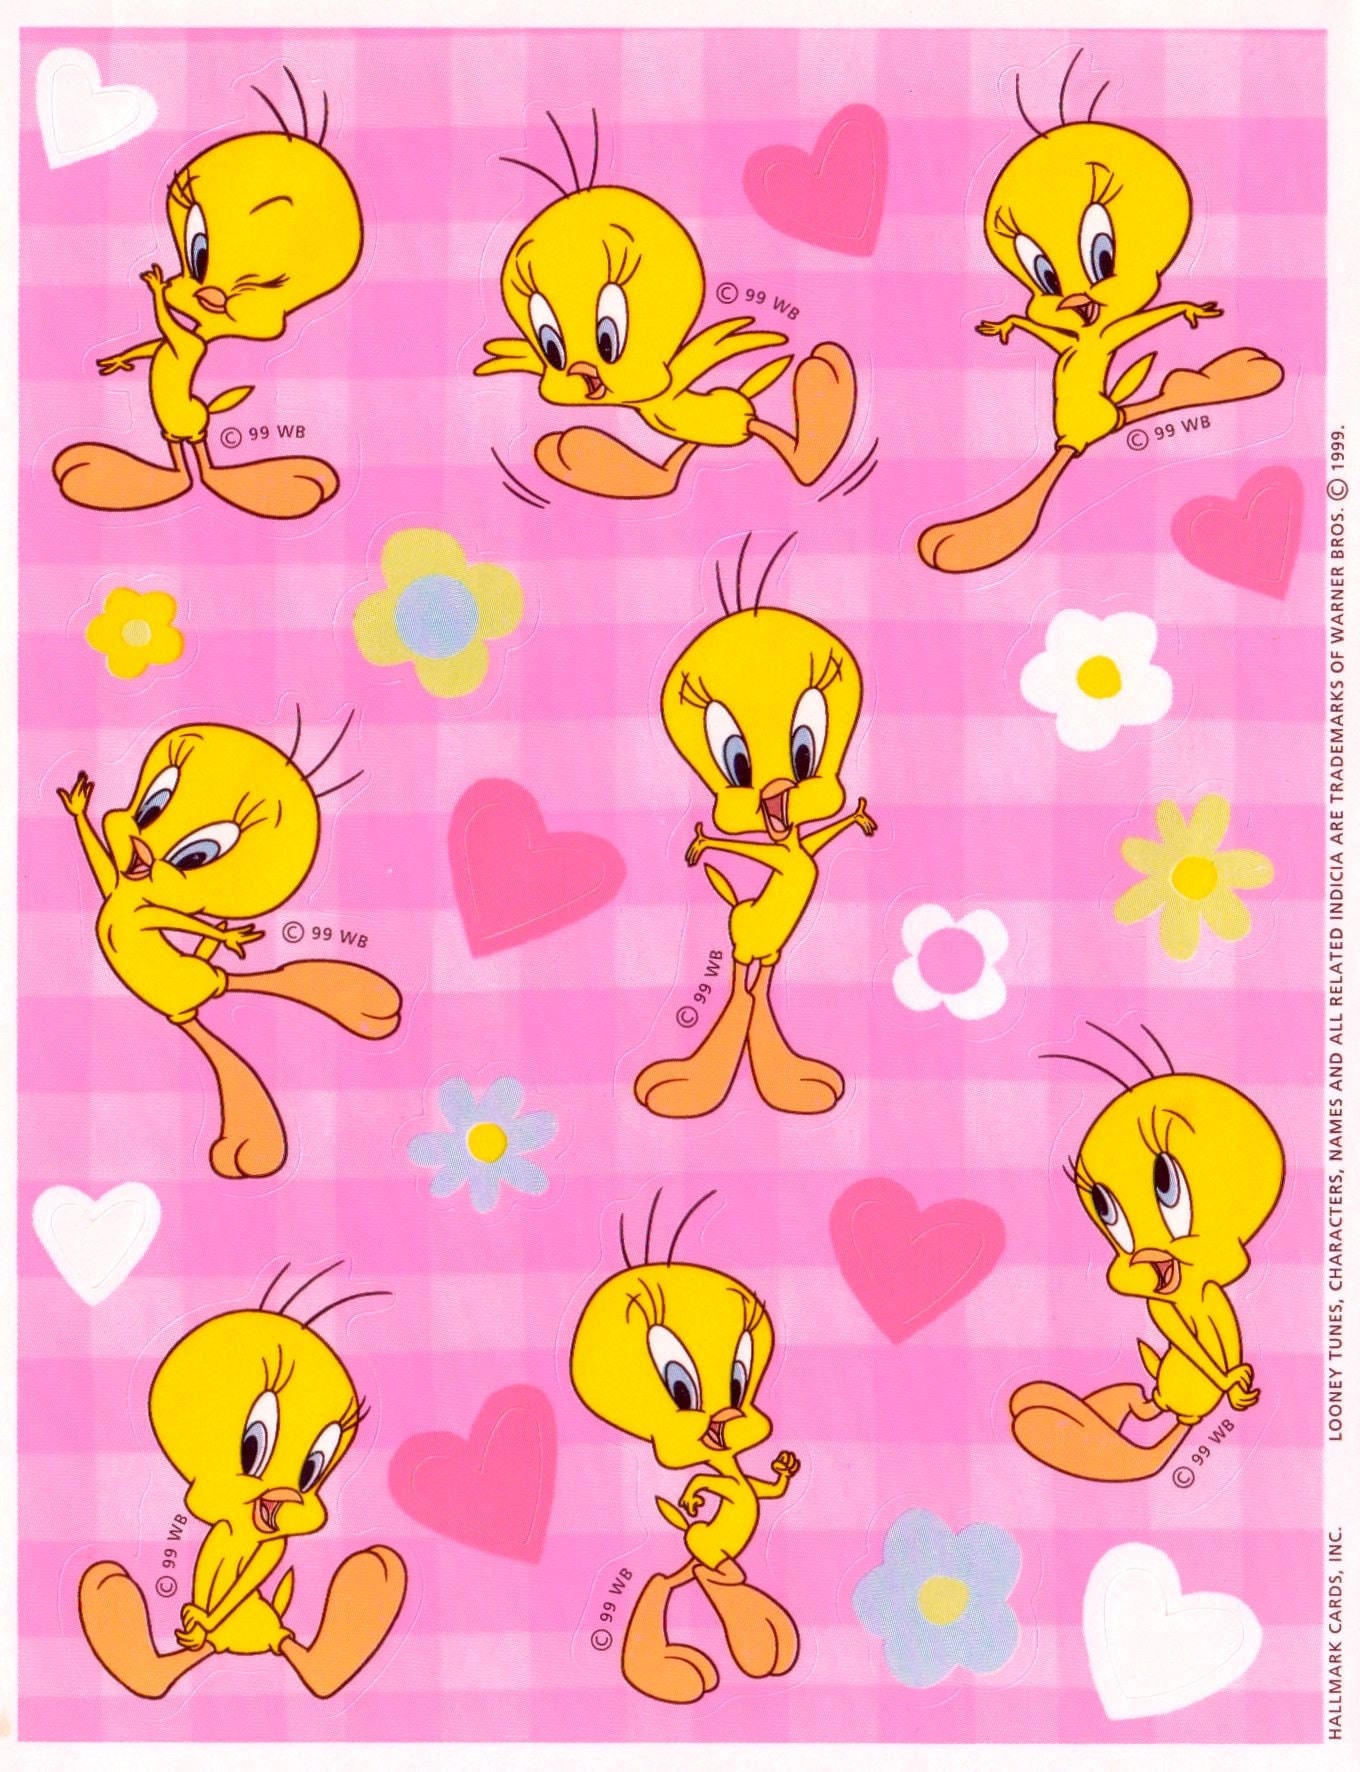 Tweety Bird Cute Sticker - Tweety Bird Cute Blinking - Discover